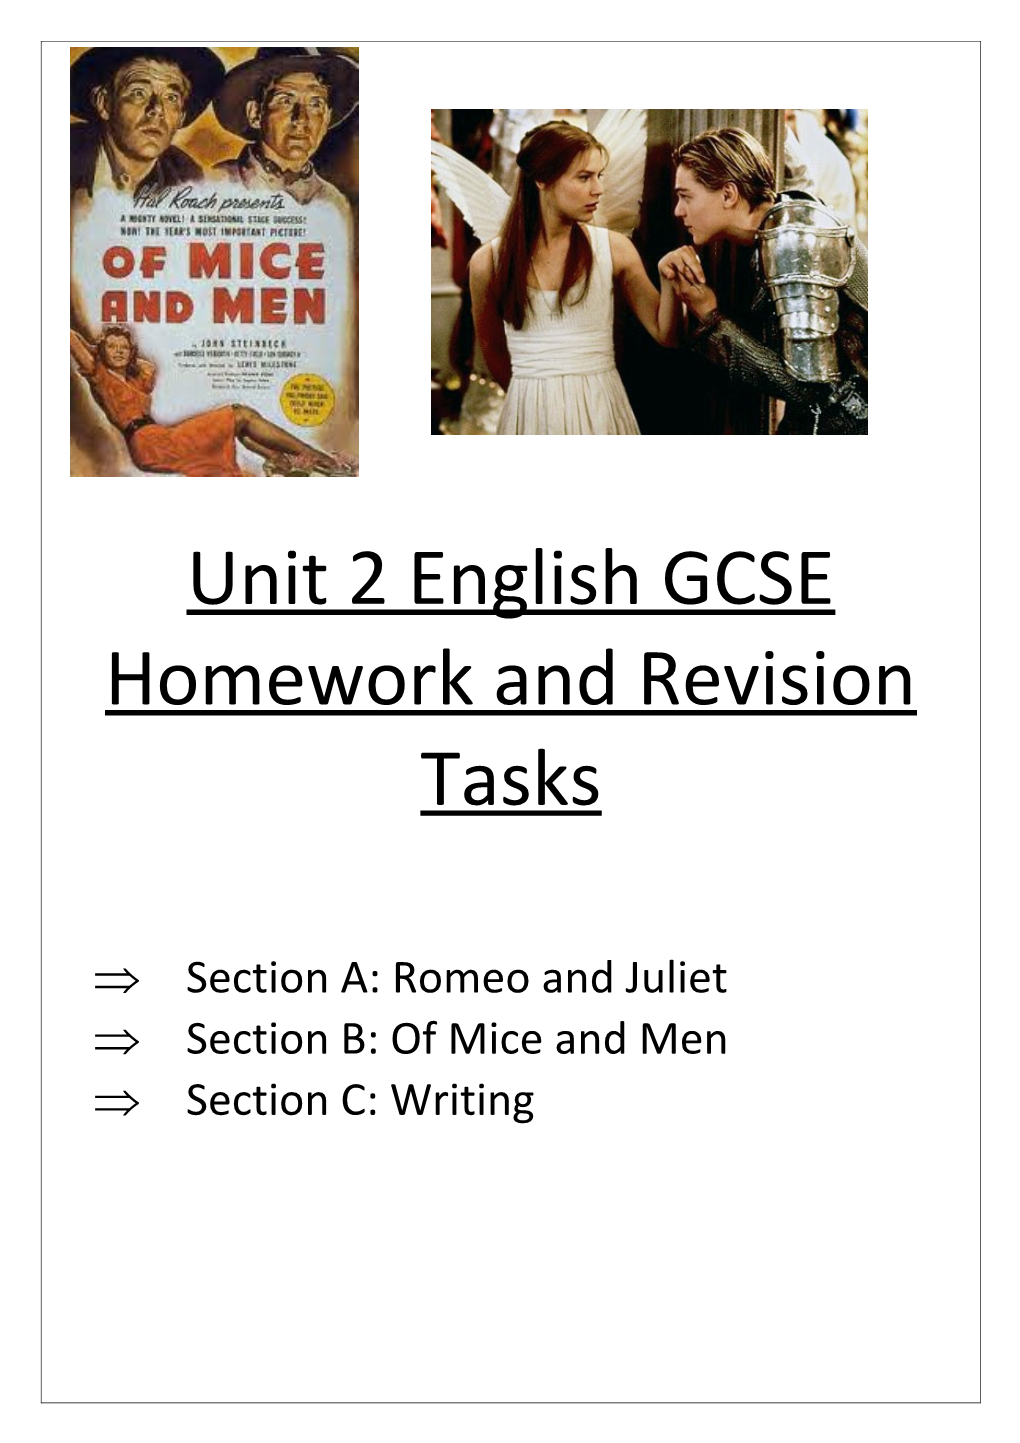 Homework and Revision Tasks